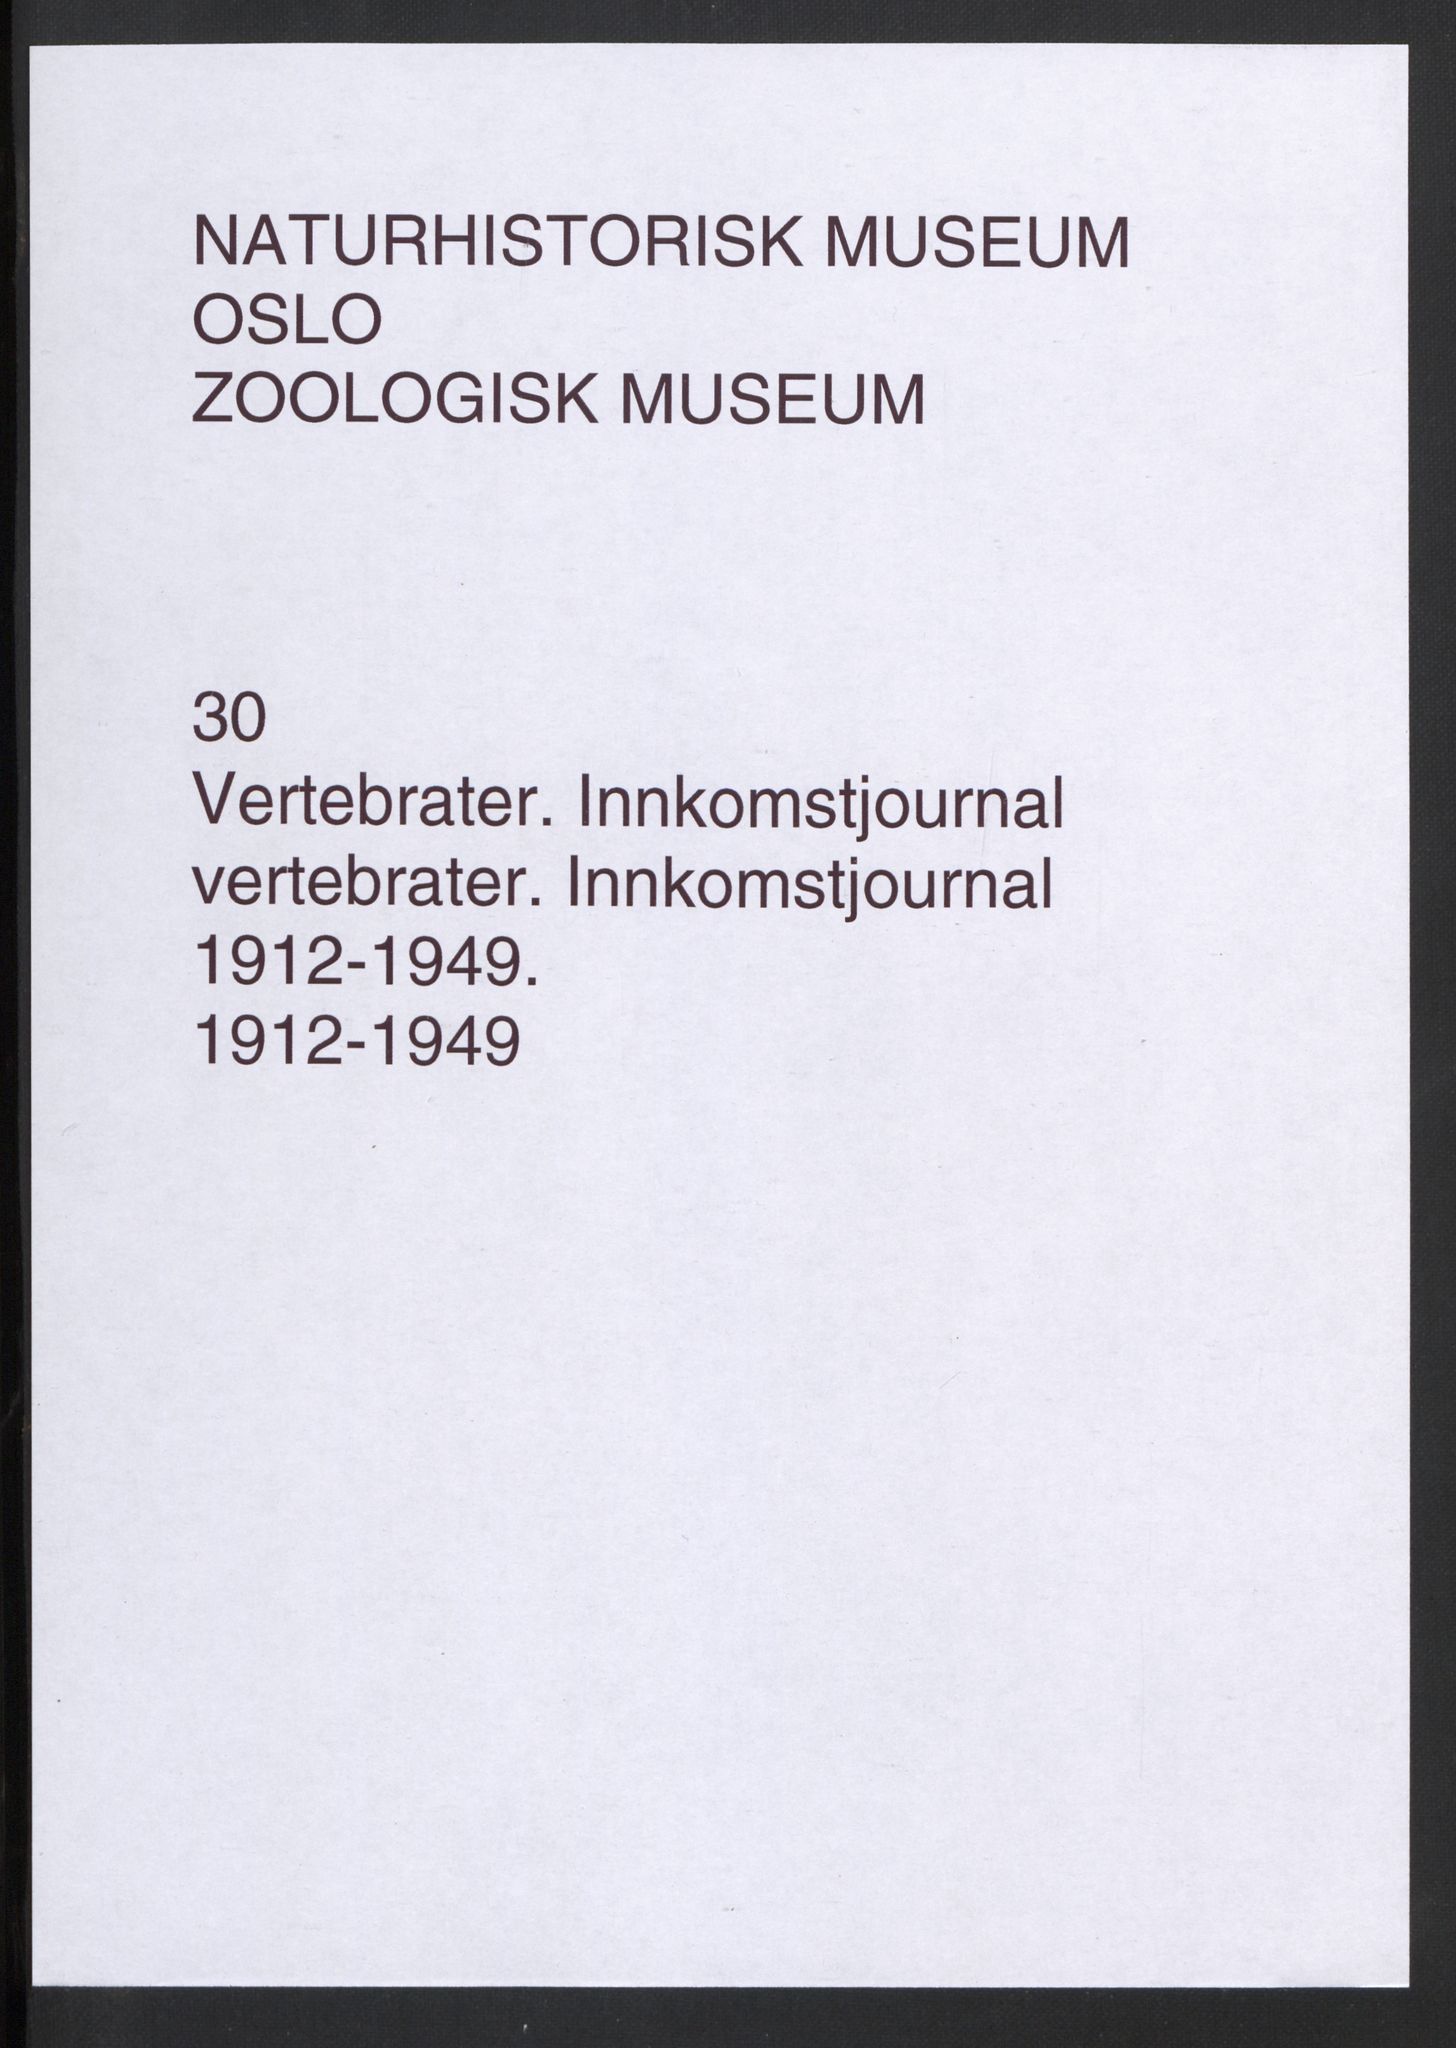 Naturhistorisk museum (Oslo), NHMO/-/5, 1912-1949